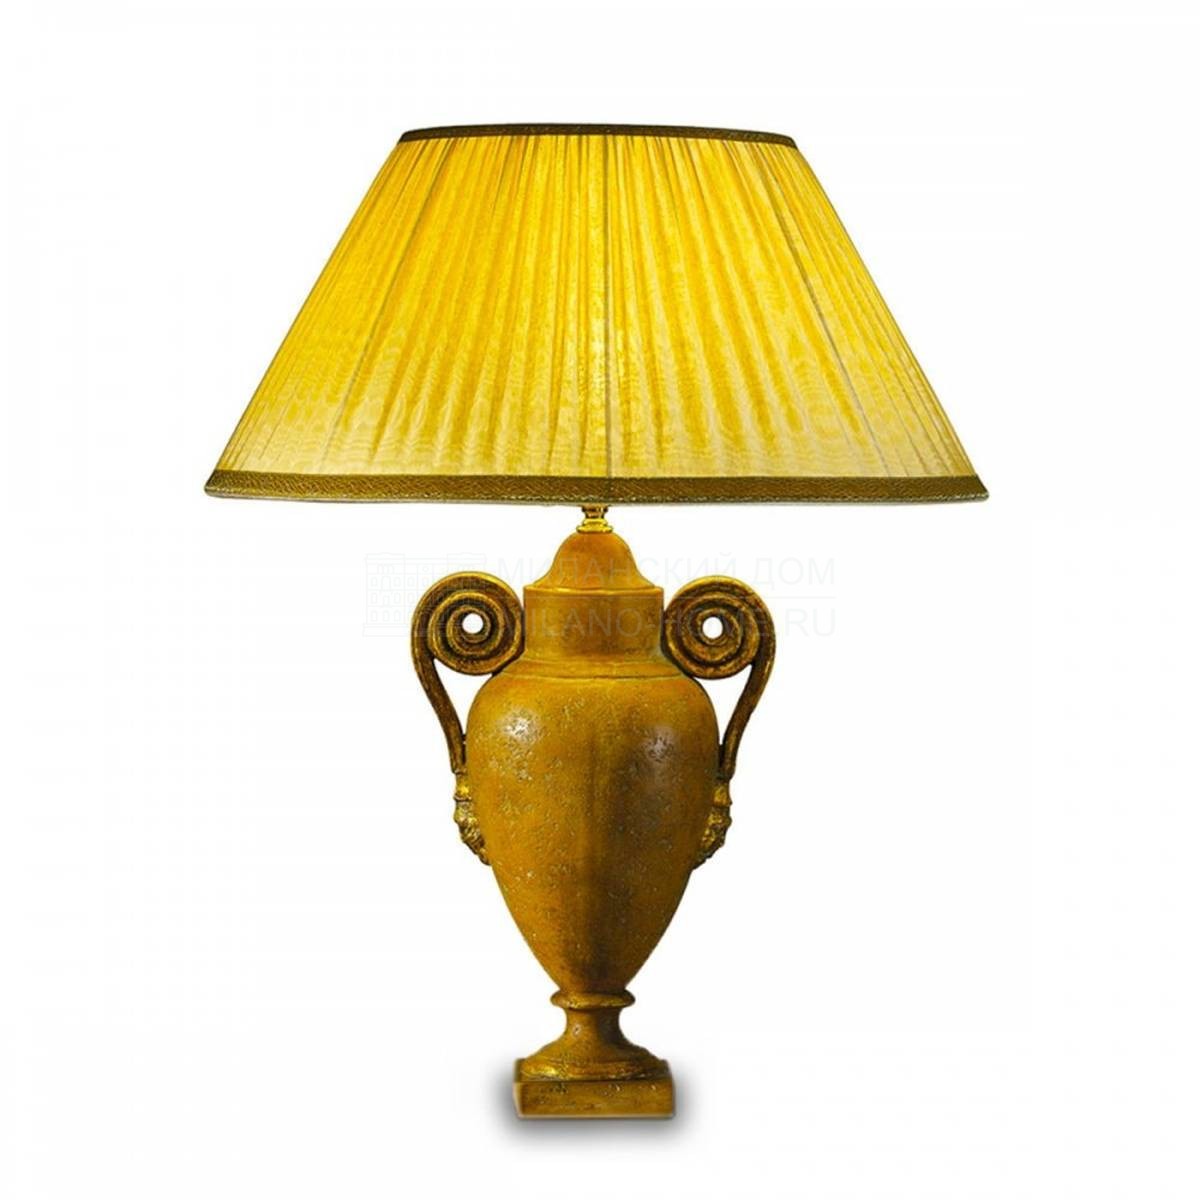 Настольная лампа Louvre table lamp из Италии фабрики MARIONI